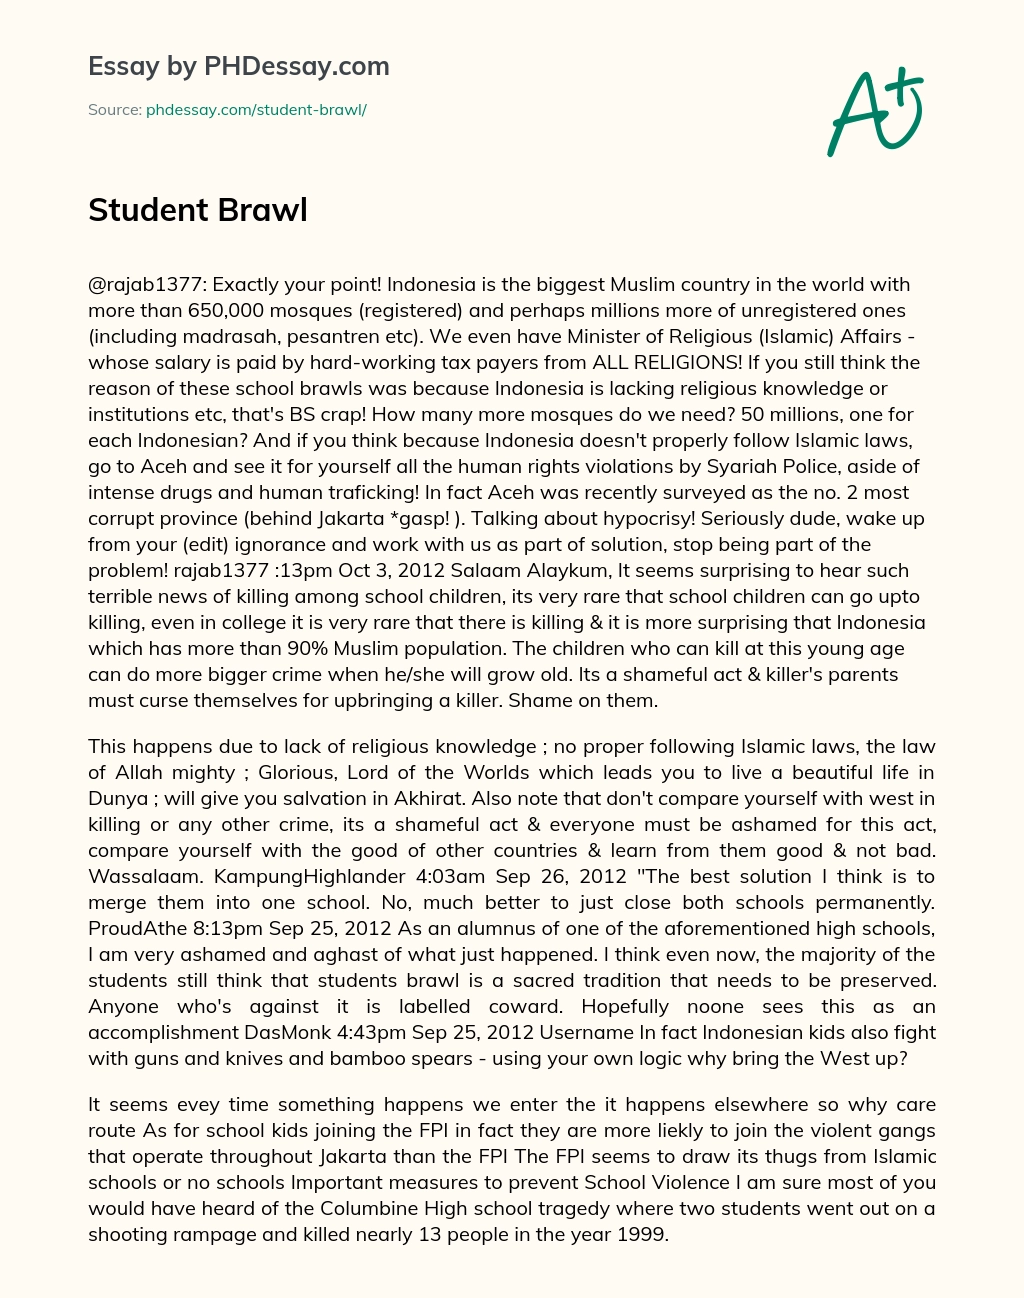 Student Brawl essay